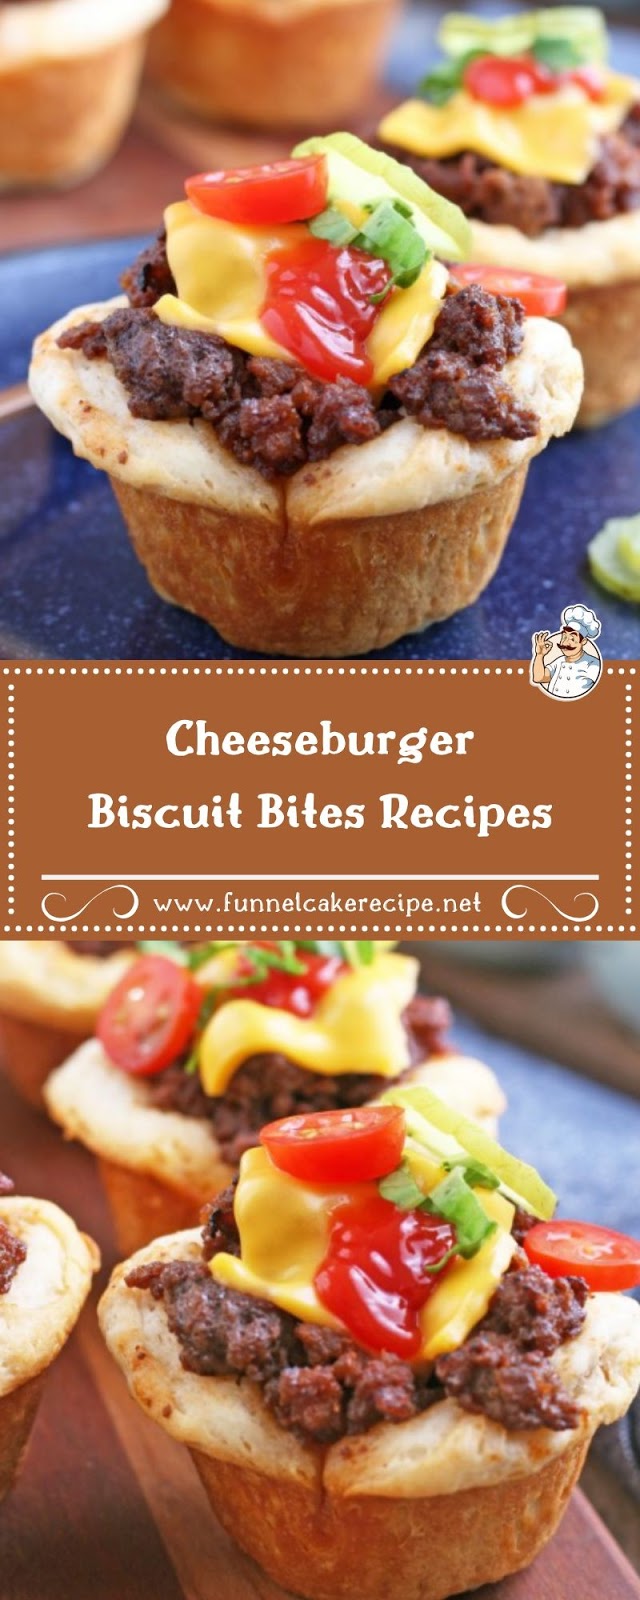 Cheeseburger Biscuit Bites Recipes